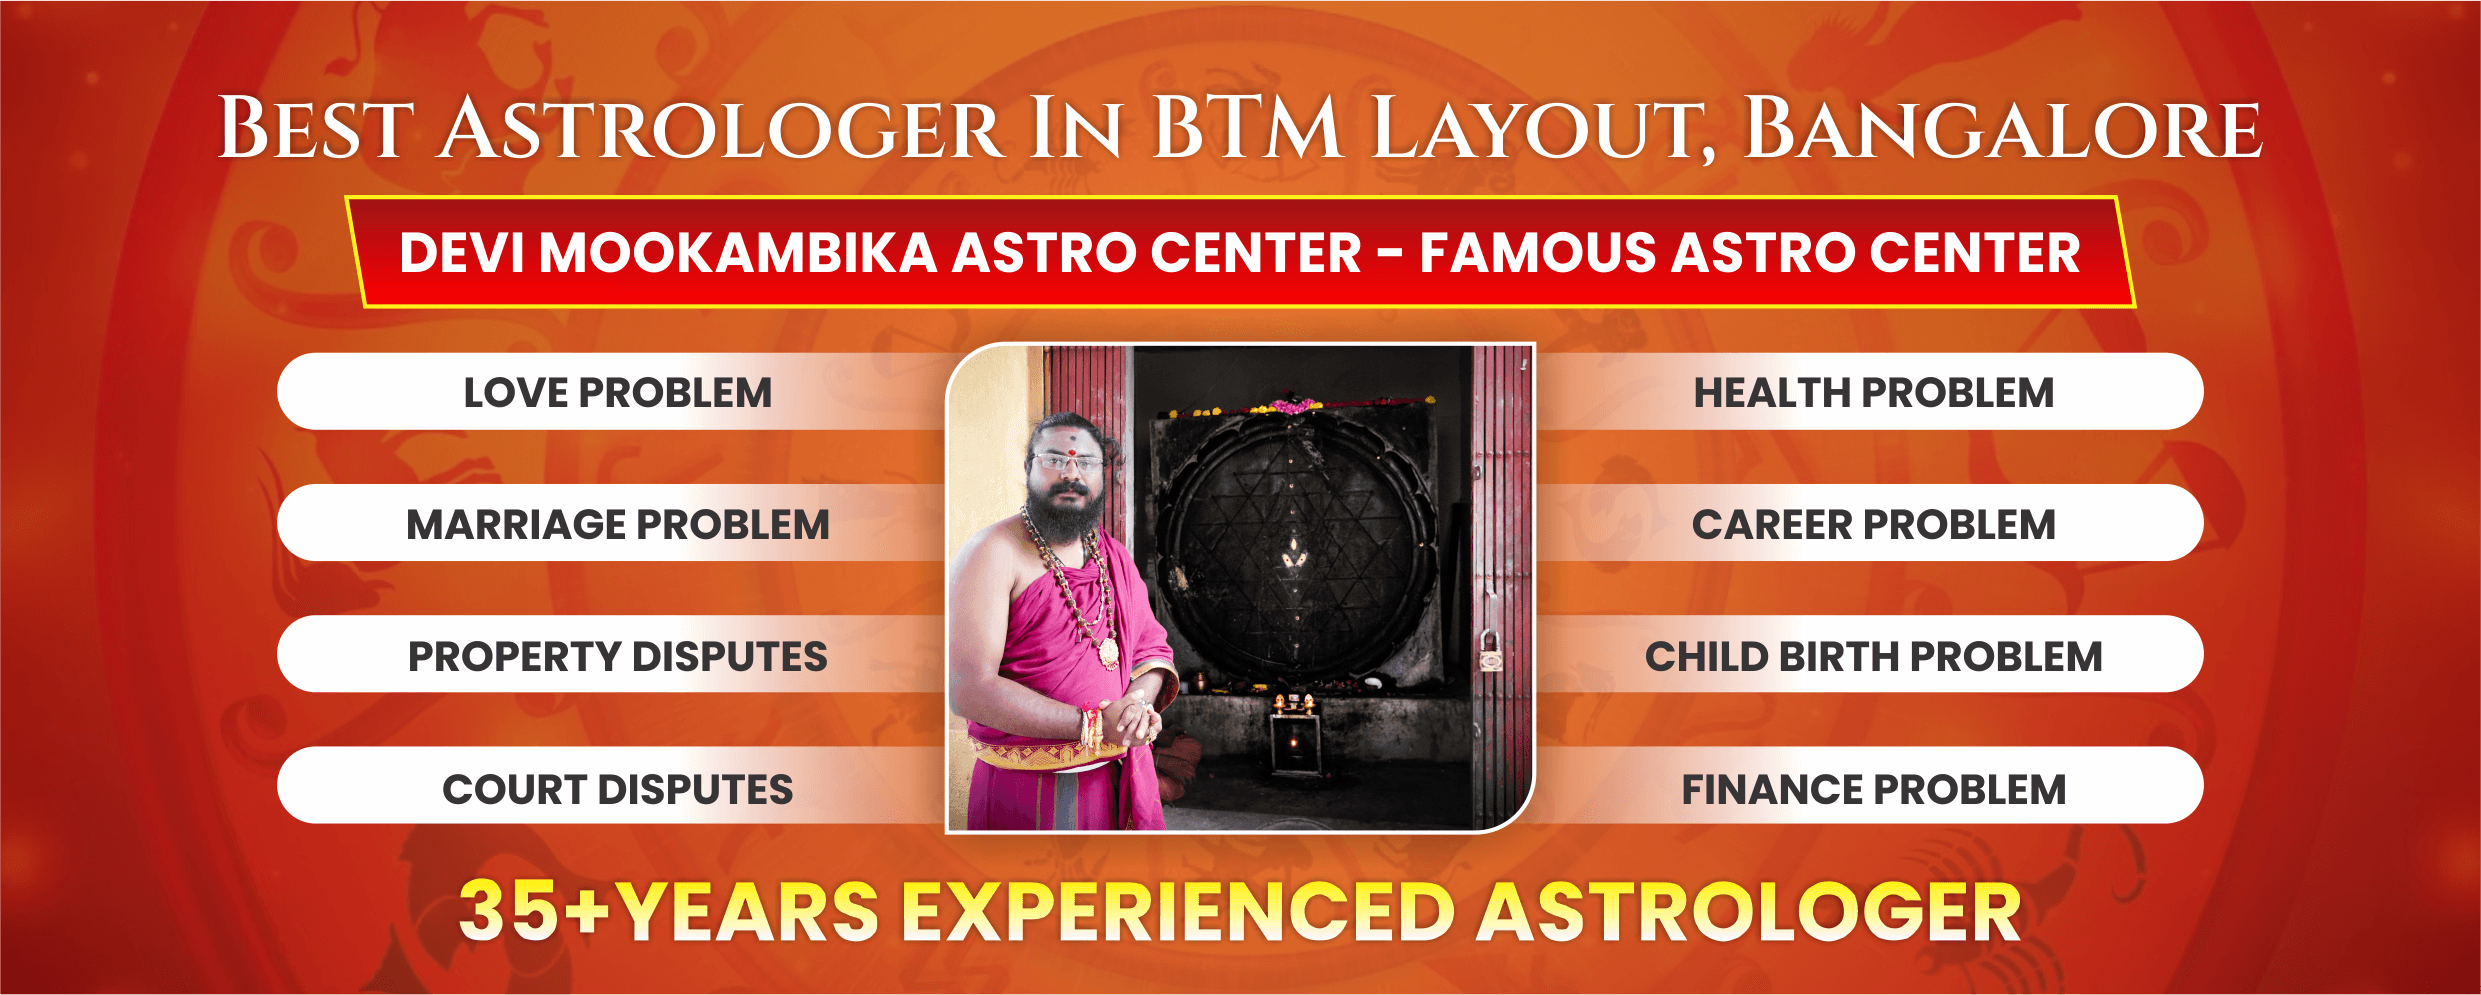 Best Astrologer in BTM Layout Bangalore